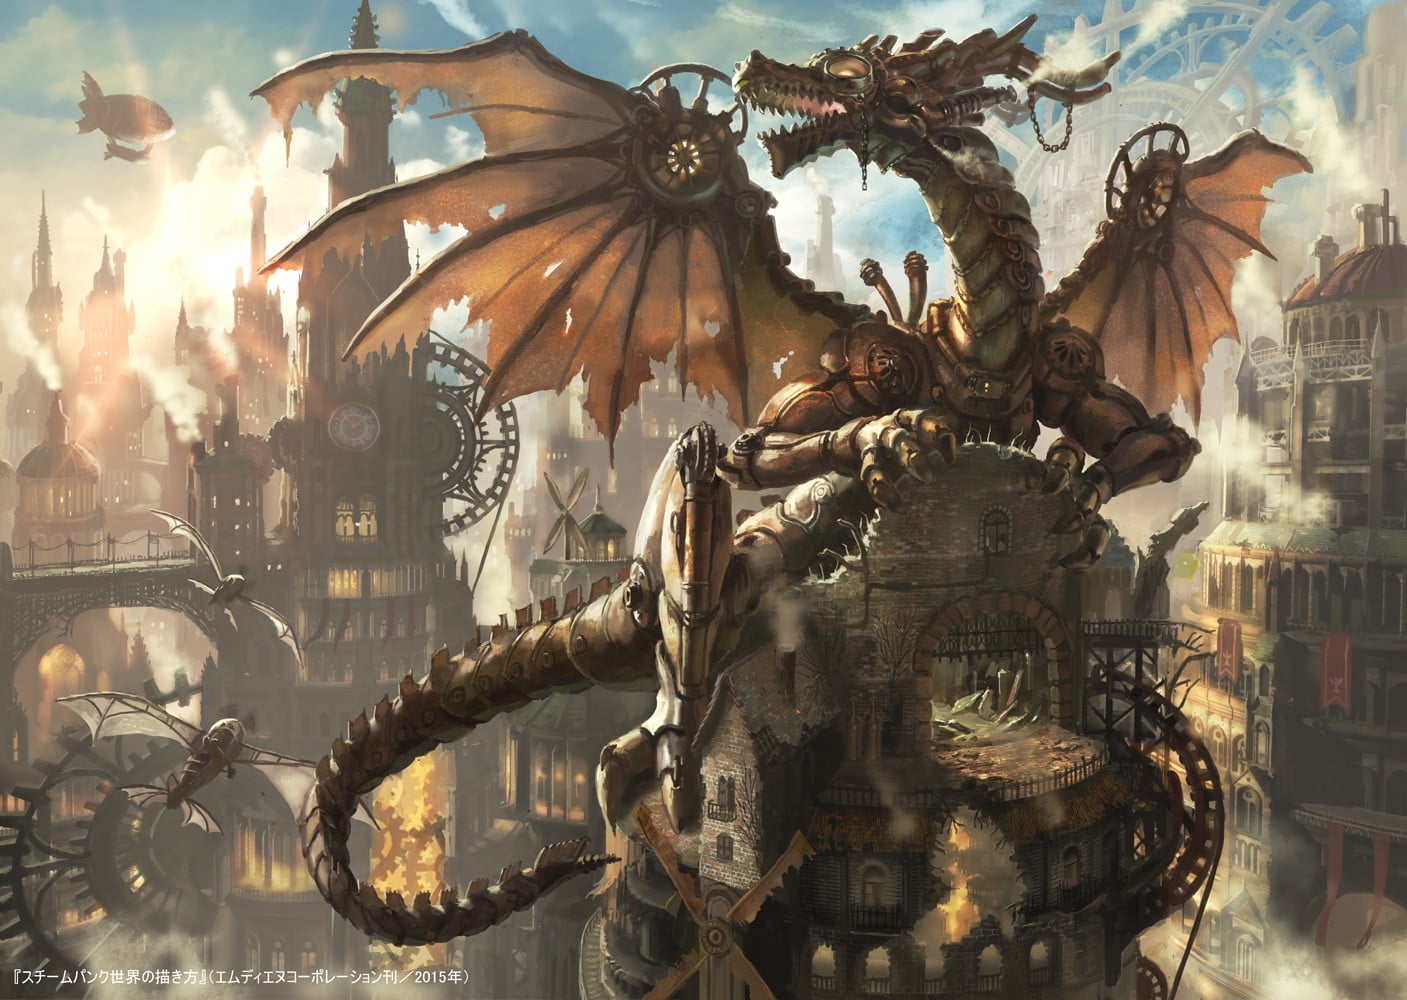 brown dragon illustration, clockworks, steampunk, architecture